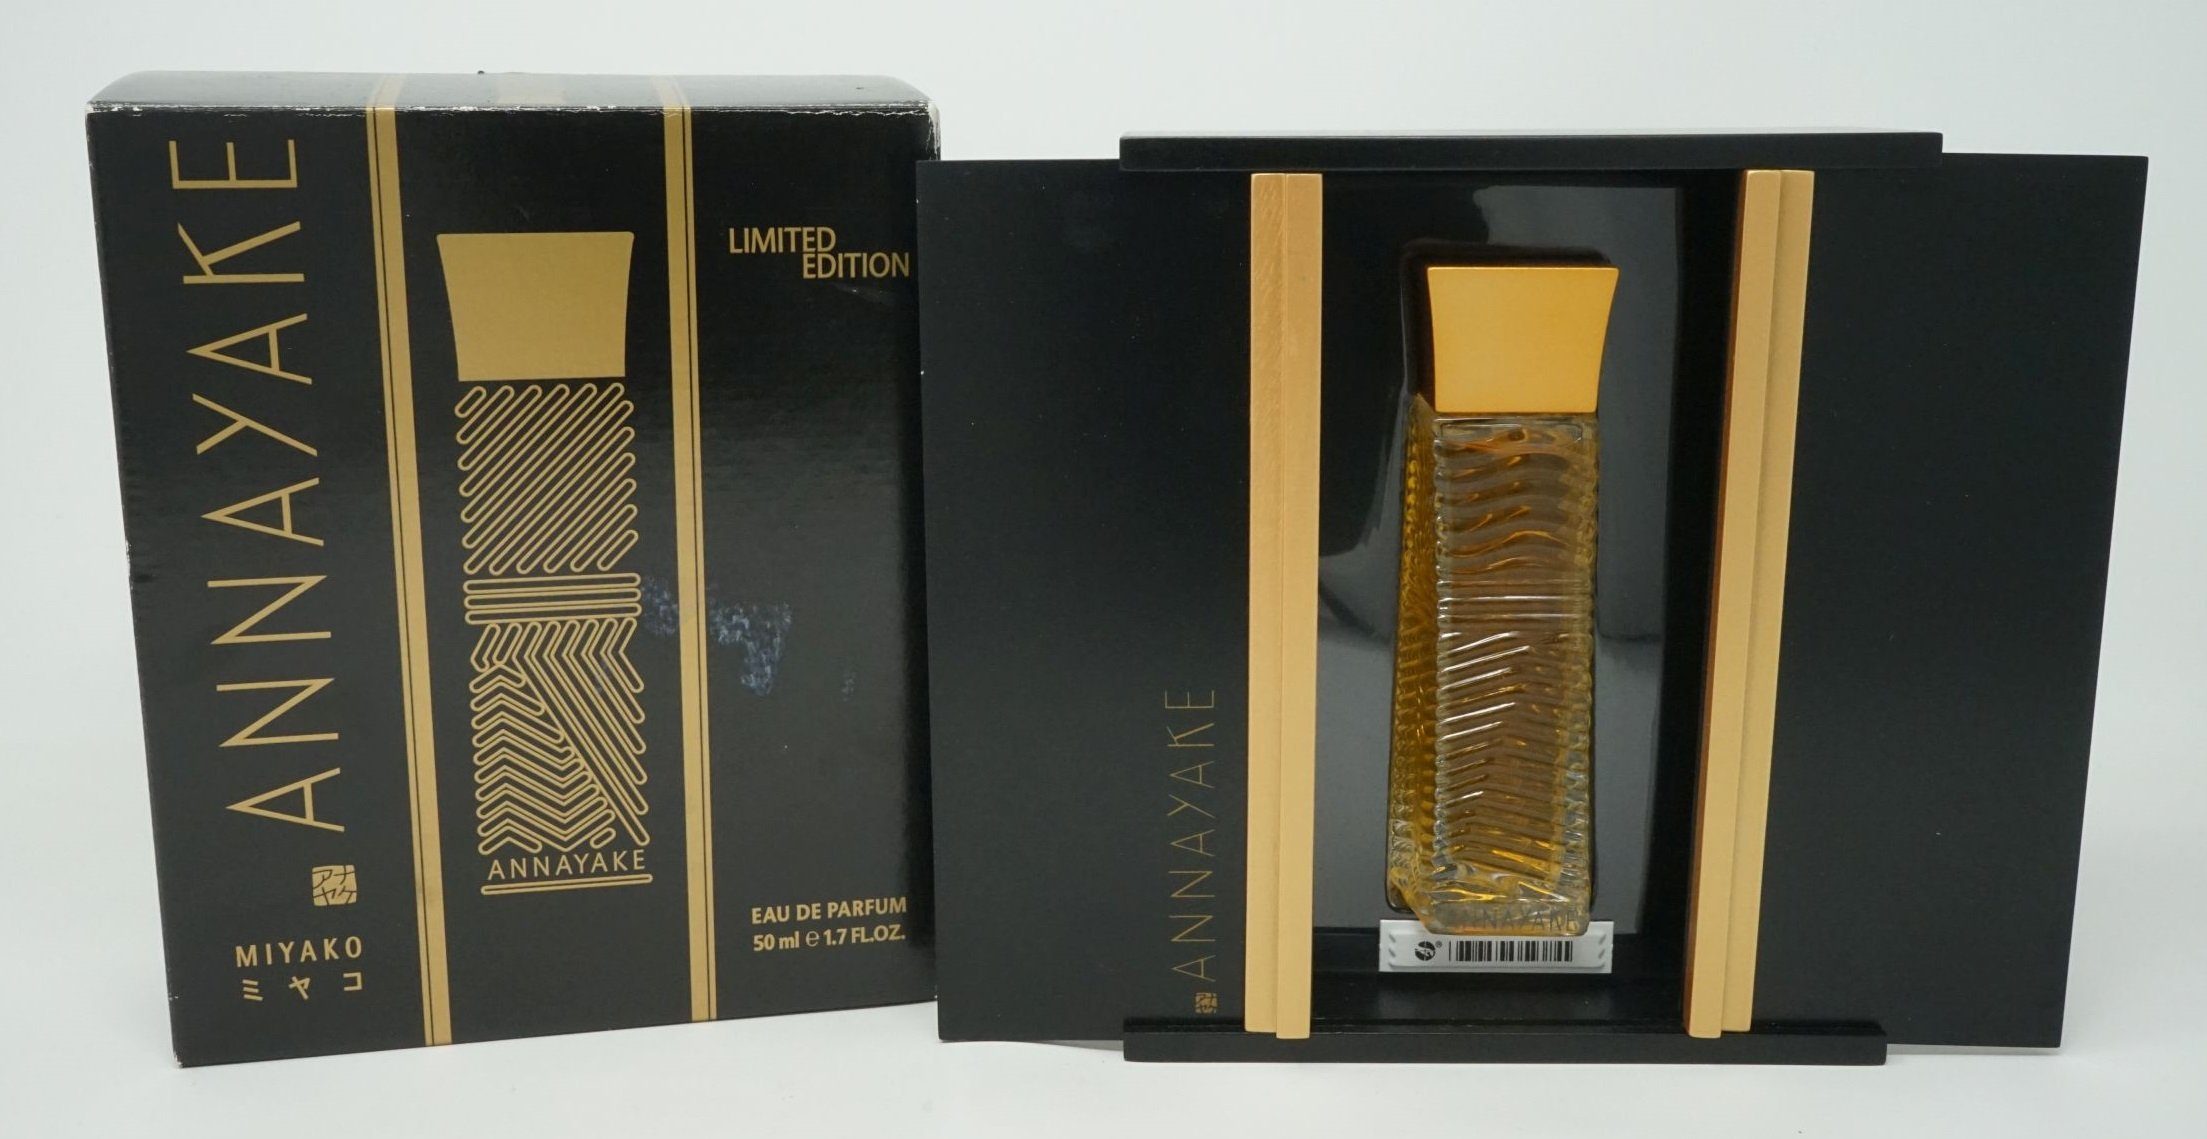 ANNAYAKE Eau de Toilette Annayake Miyako Limited Edition Eau de Parfum 50ml